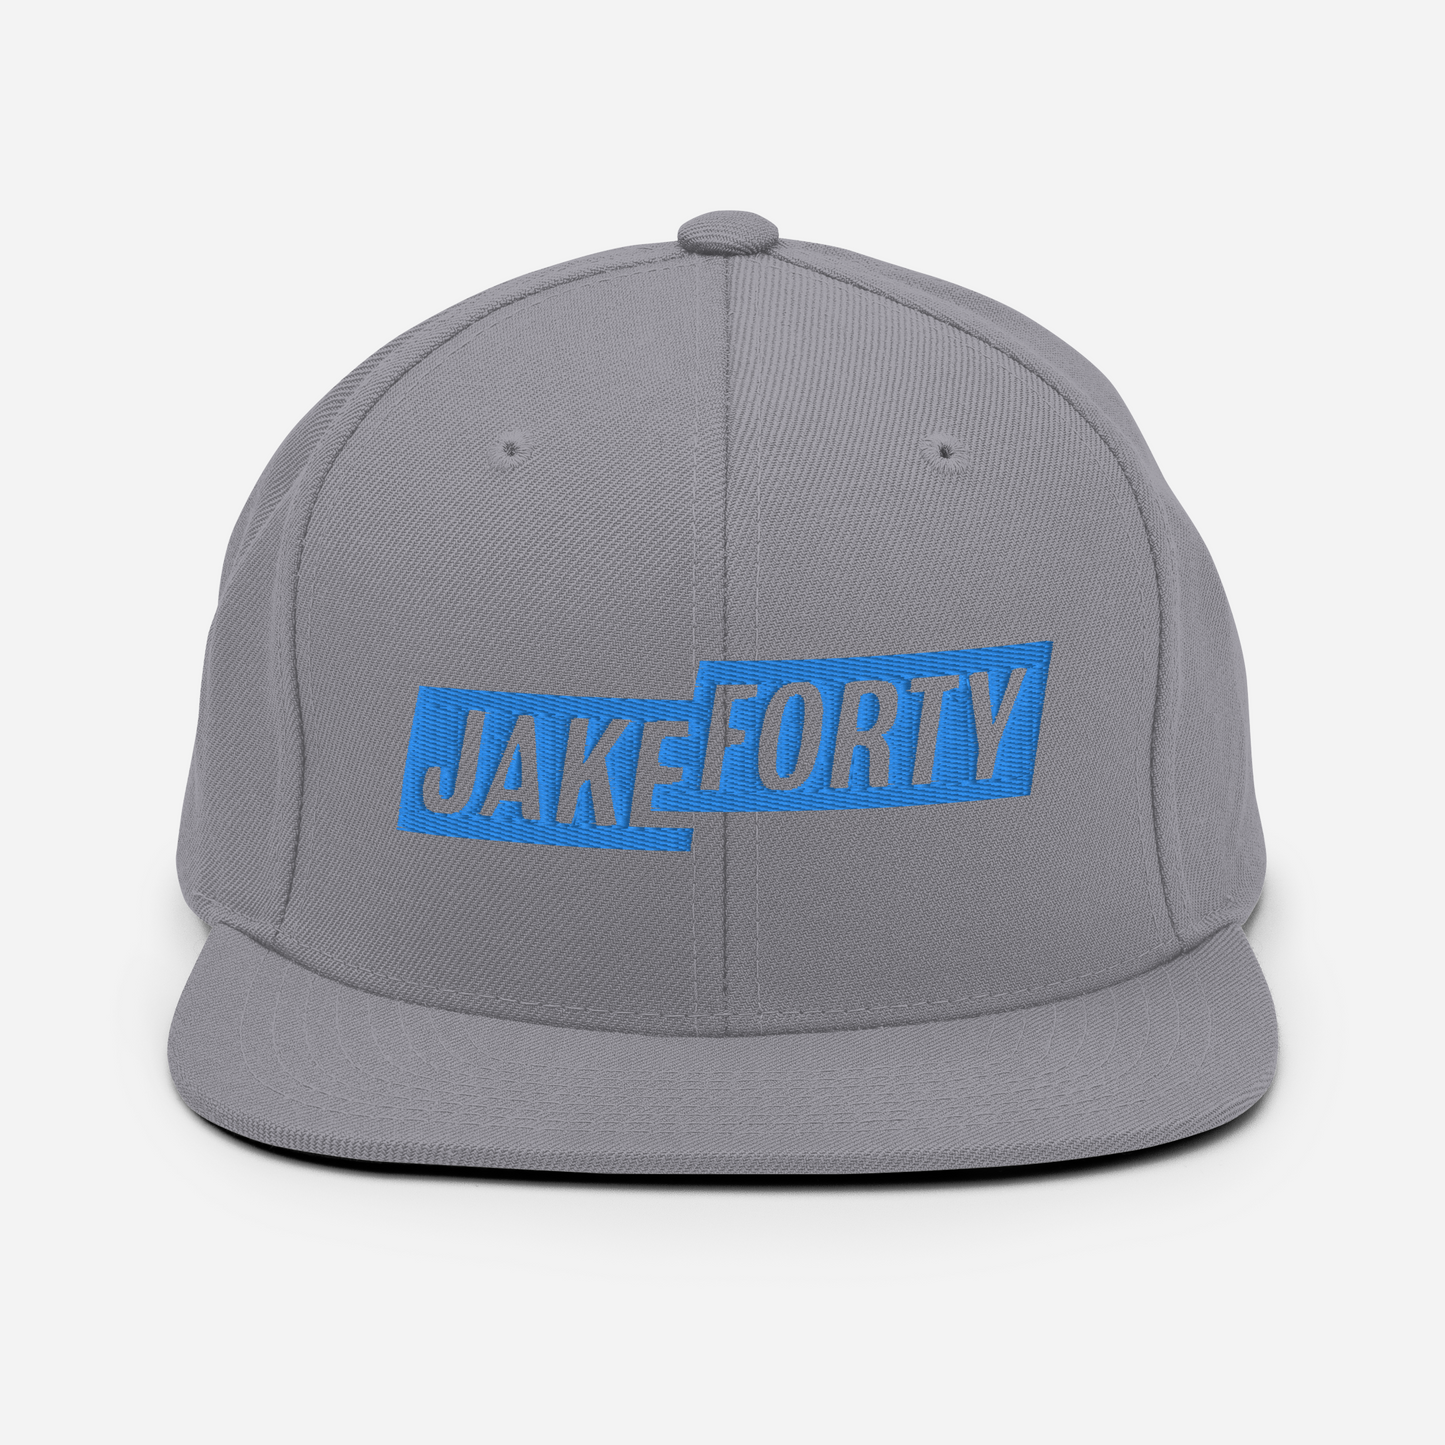 Jake Forty Snapback Hat